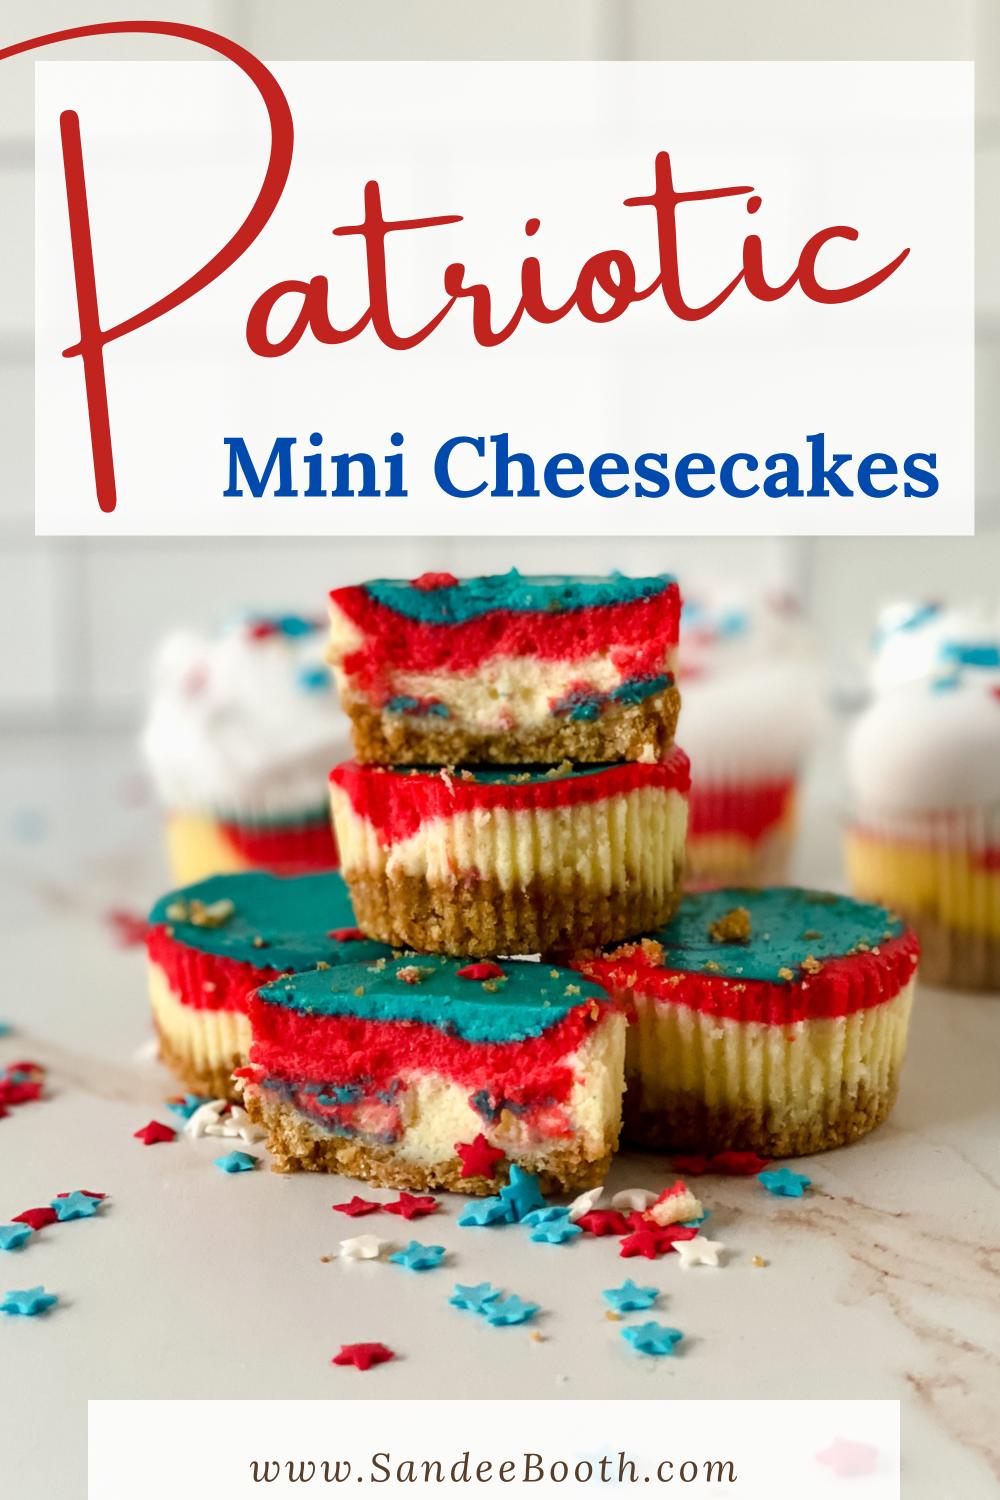 cupcake and patriotic mini cheesecakes text 